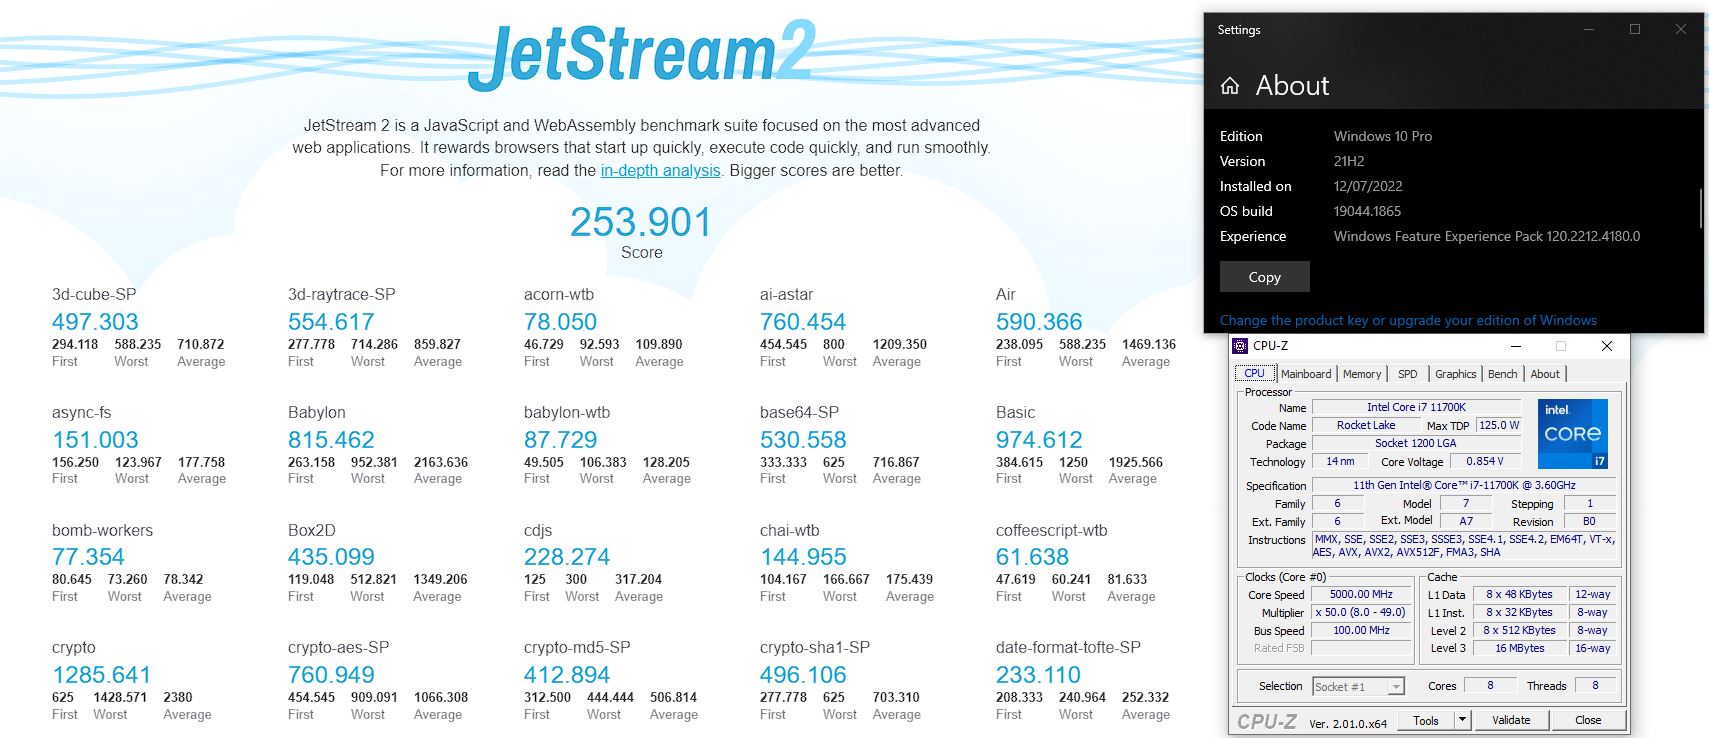 Jetstream2 Benchmark - Copy.JPG